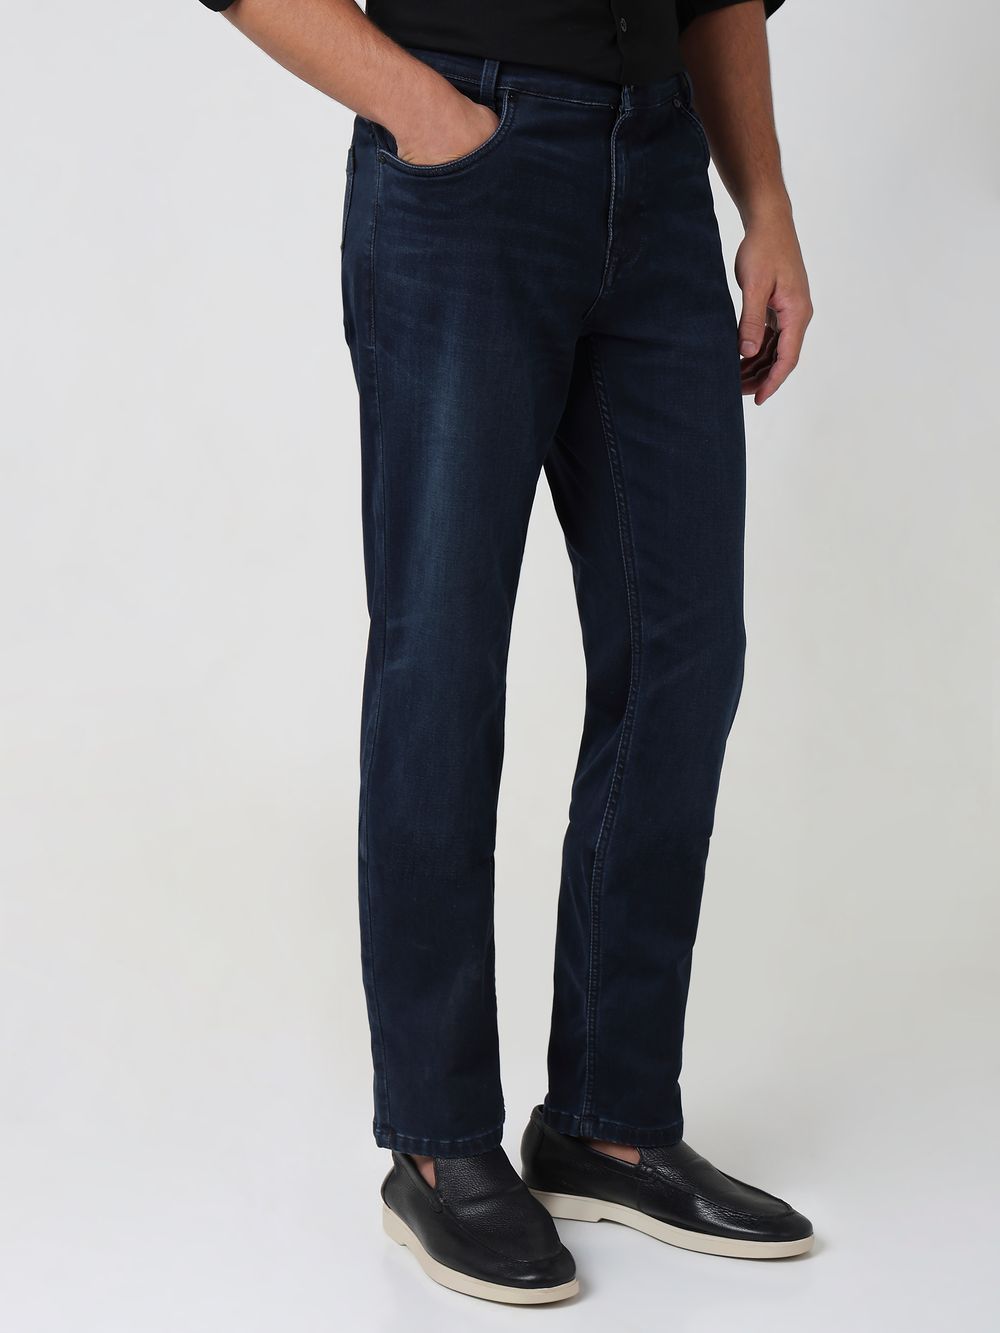 Blue Black Narrow Fit Denim Deluxe Stretch Jeans